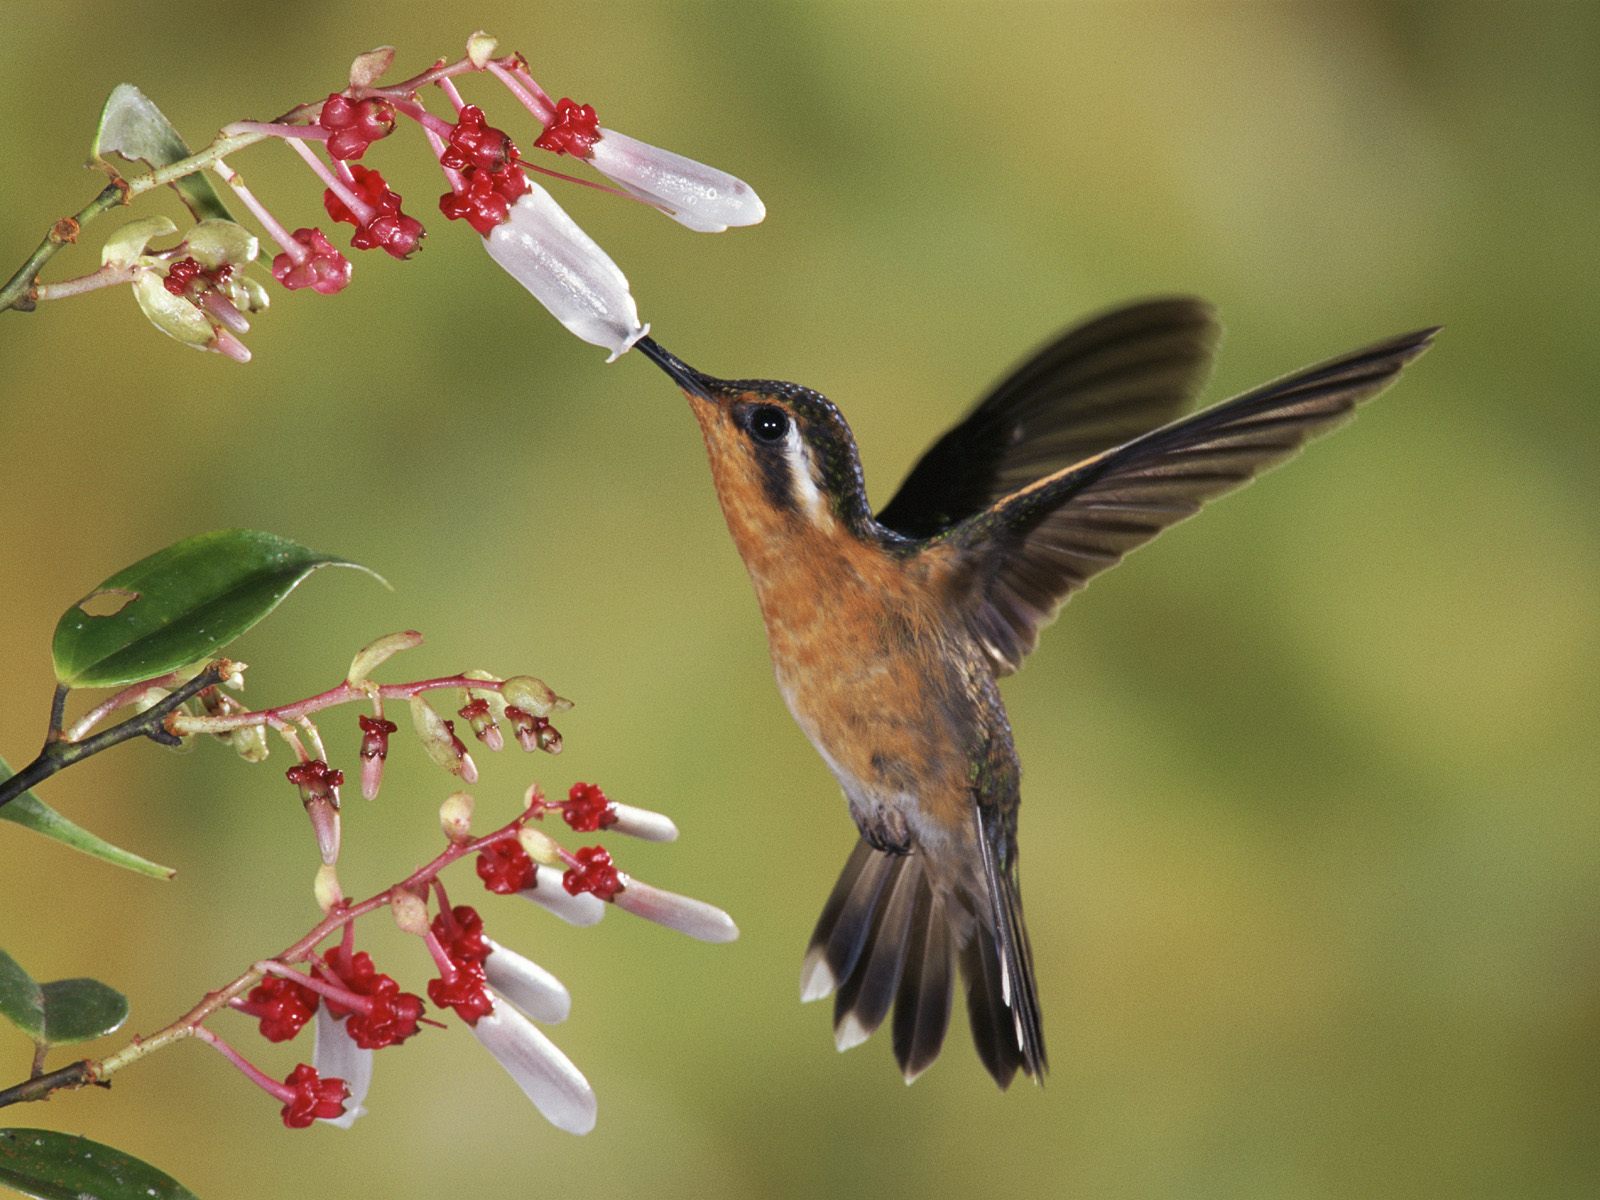 Mobile Desktop Background Hd Free Download Images Of Beautiful Birds